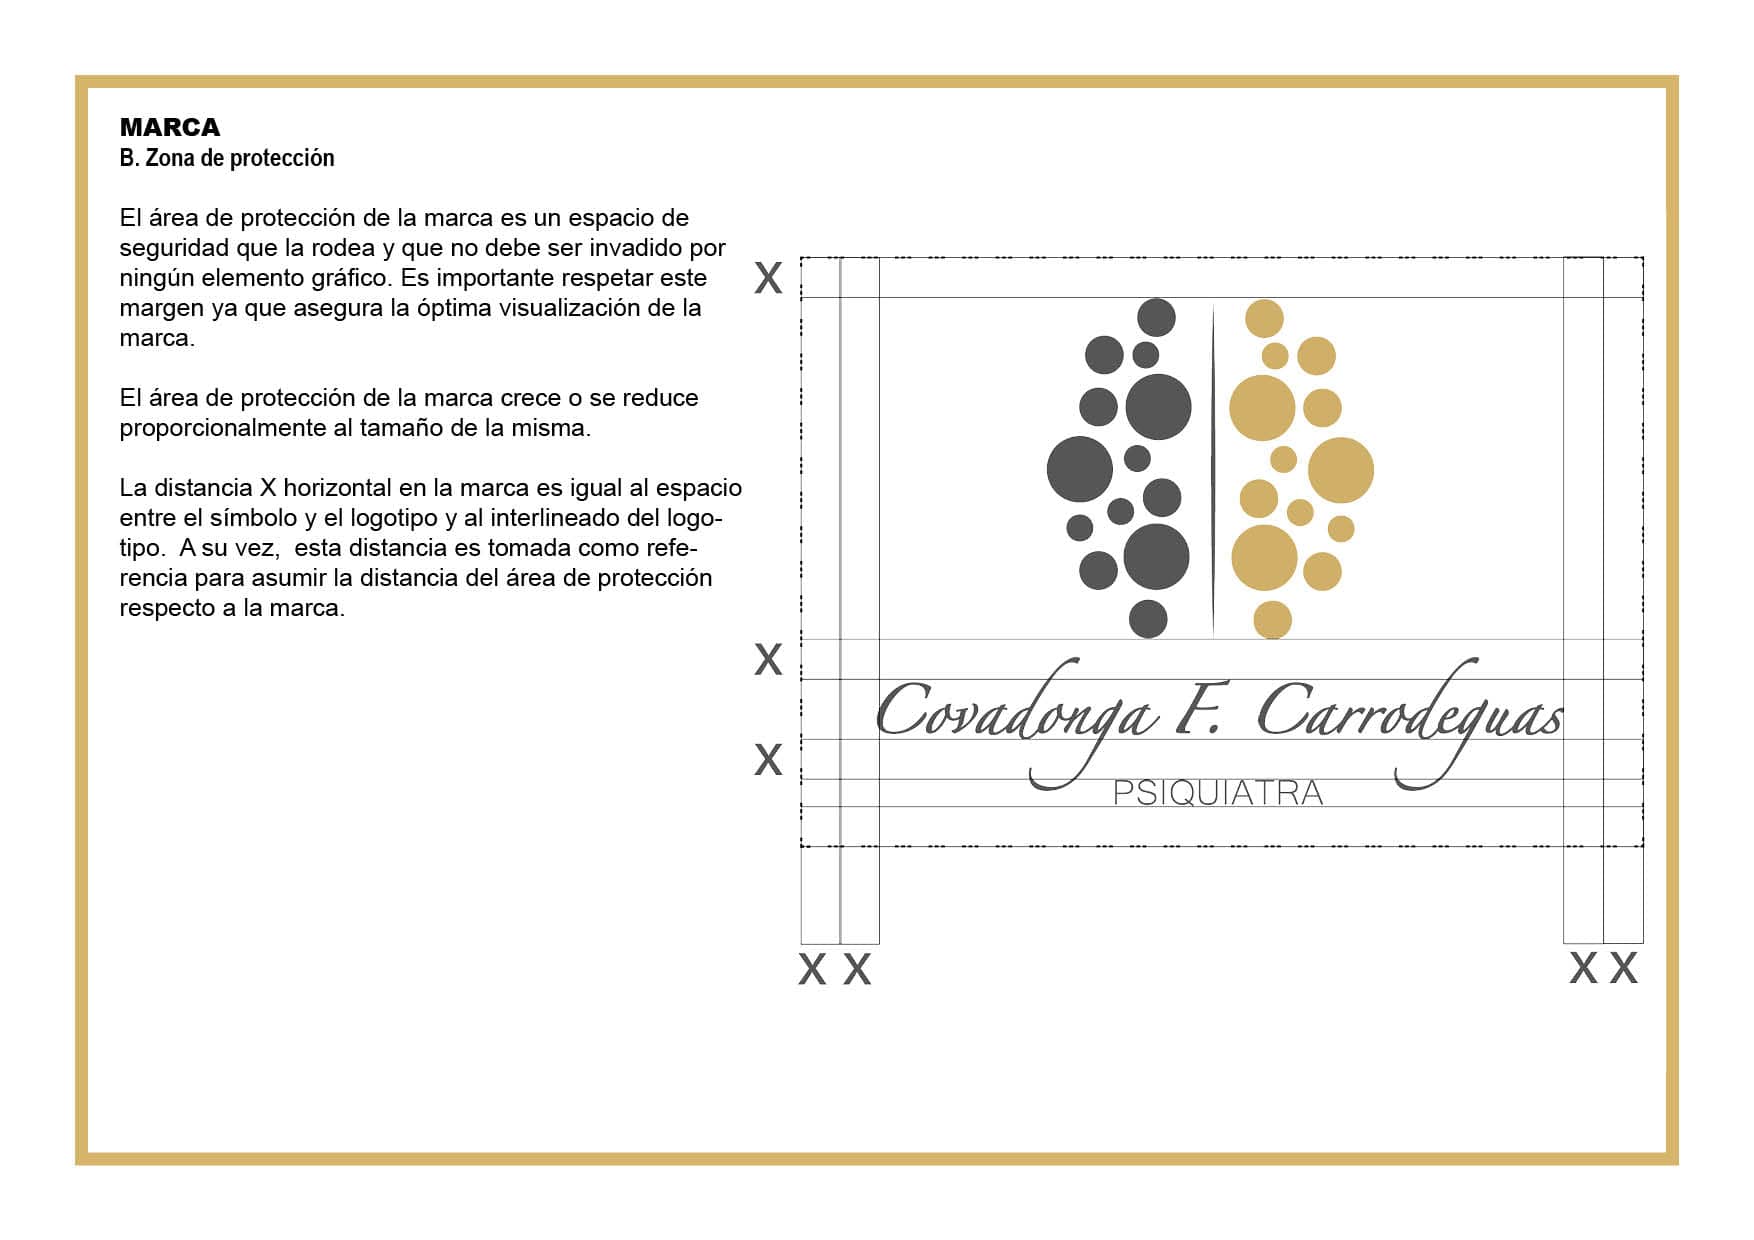 Manual de Identidad Corporativa Covadonga Carrodeguas - Branding | Identidad corporativa